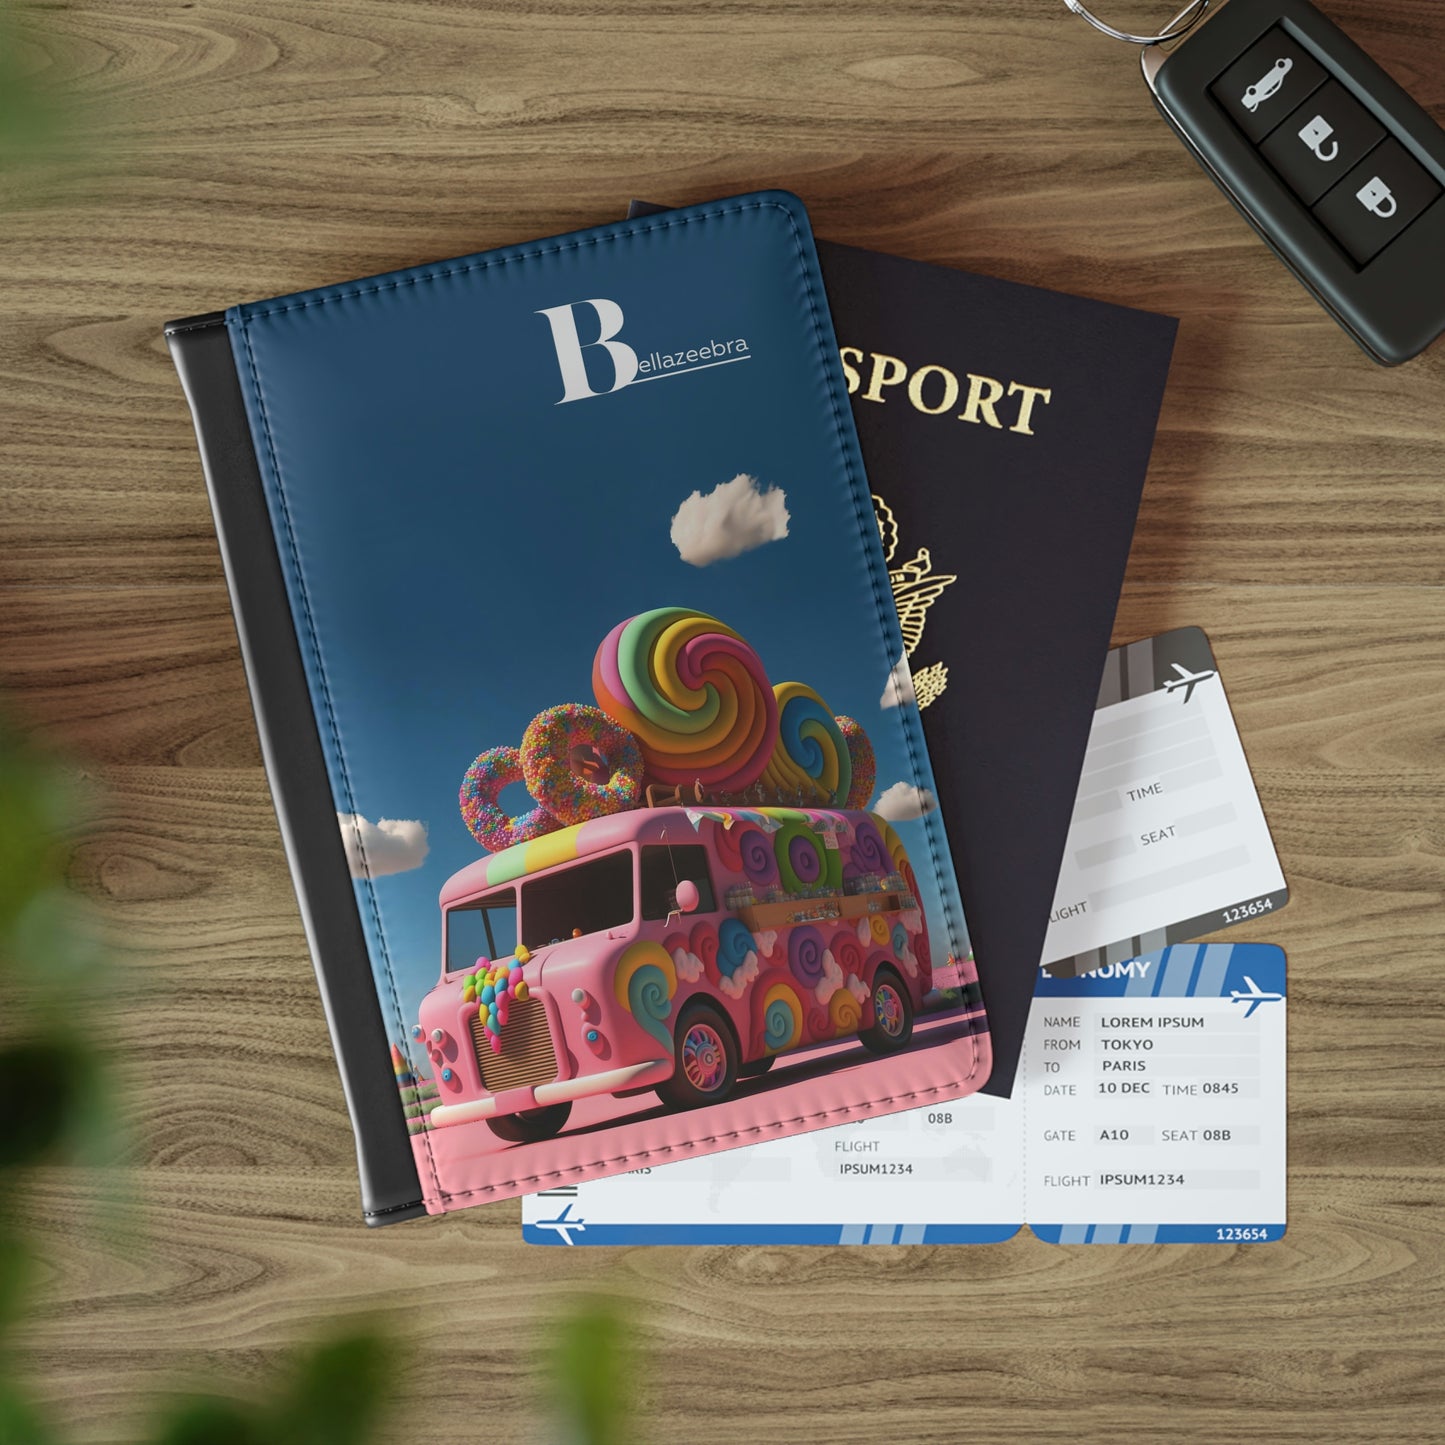 BELLAZEEBRA Passport Cover with candy caravan car design